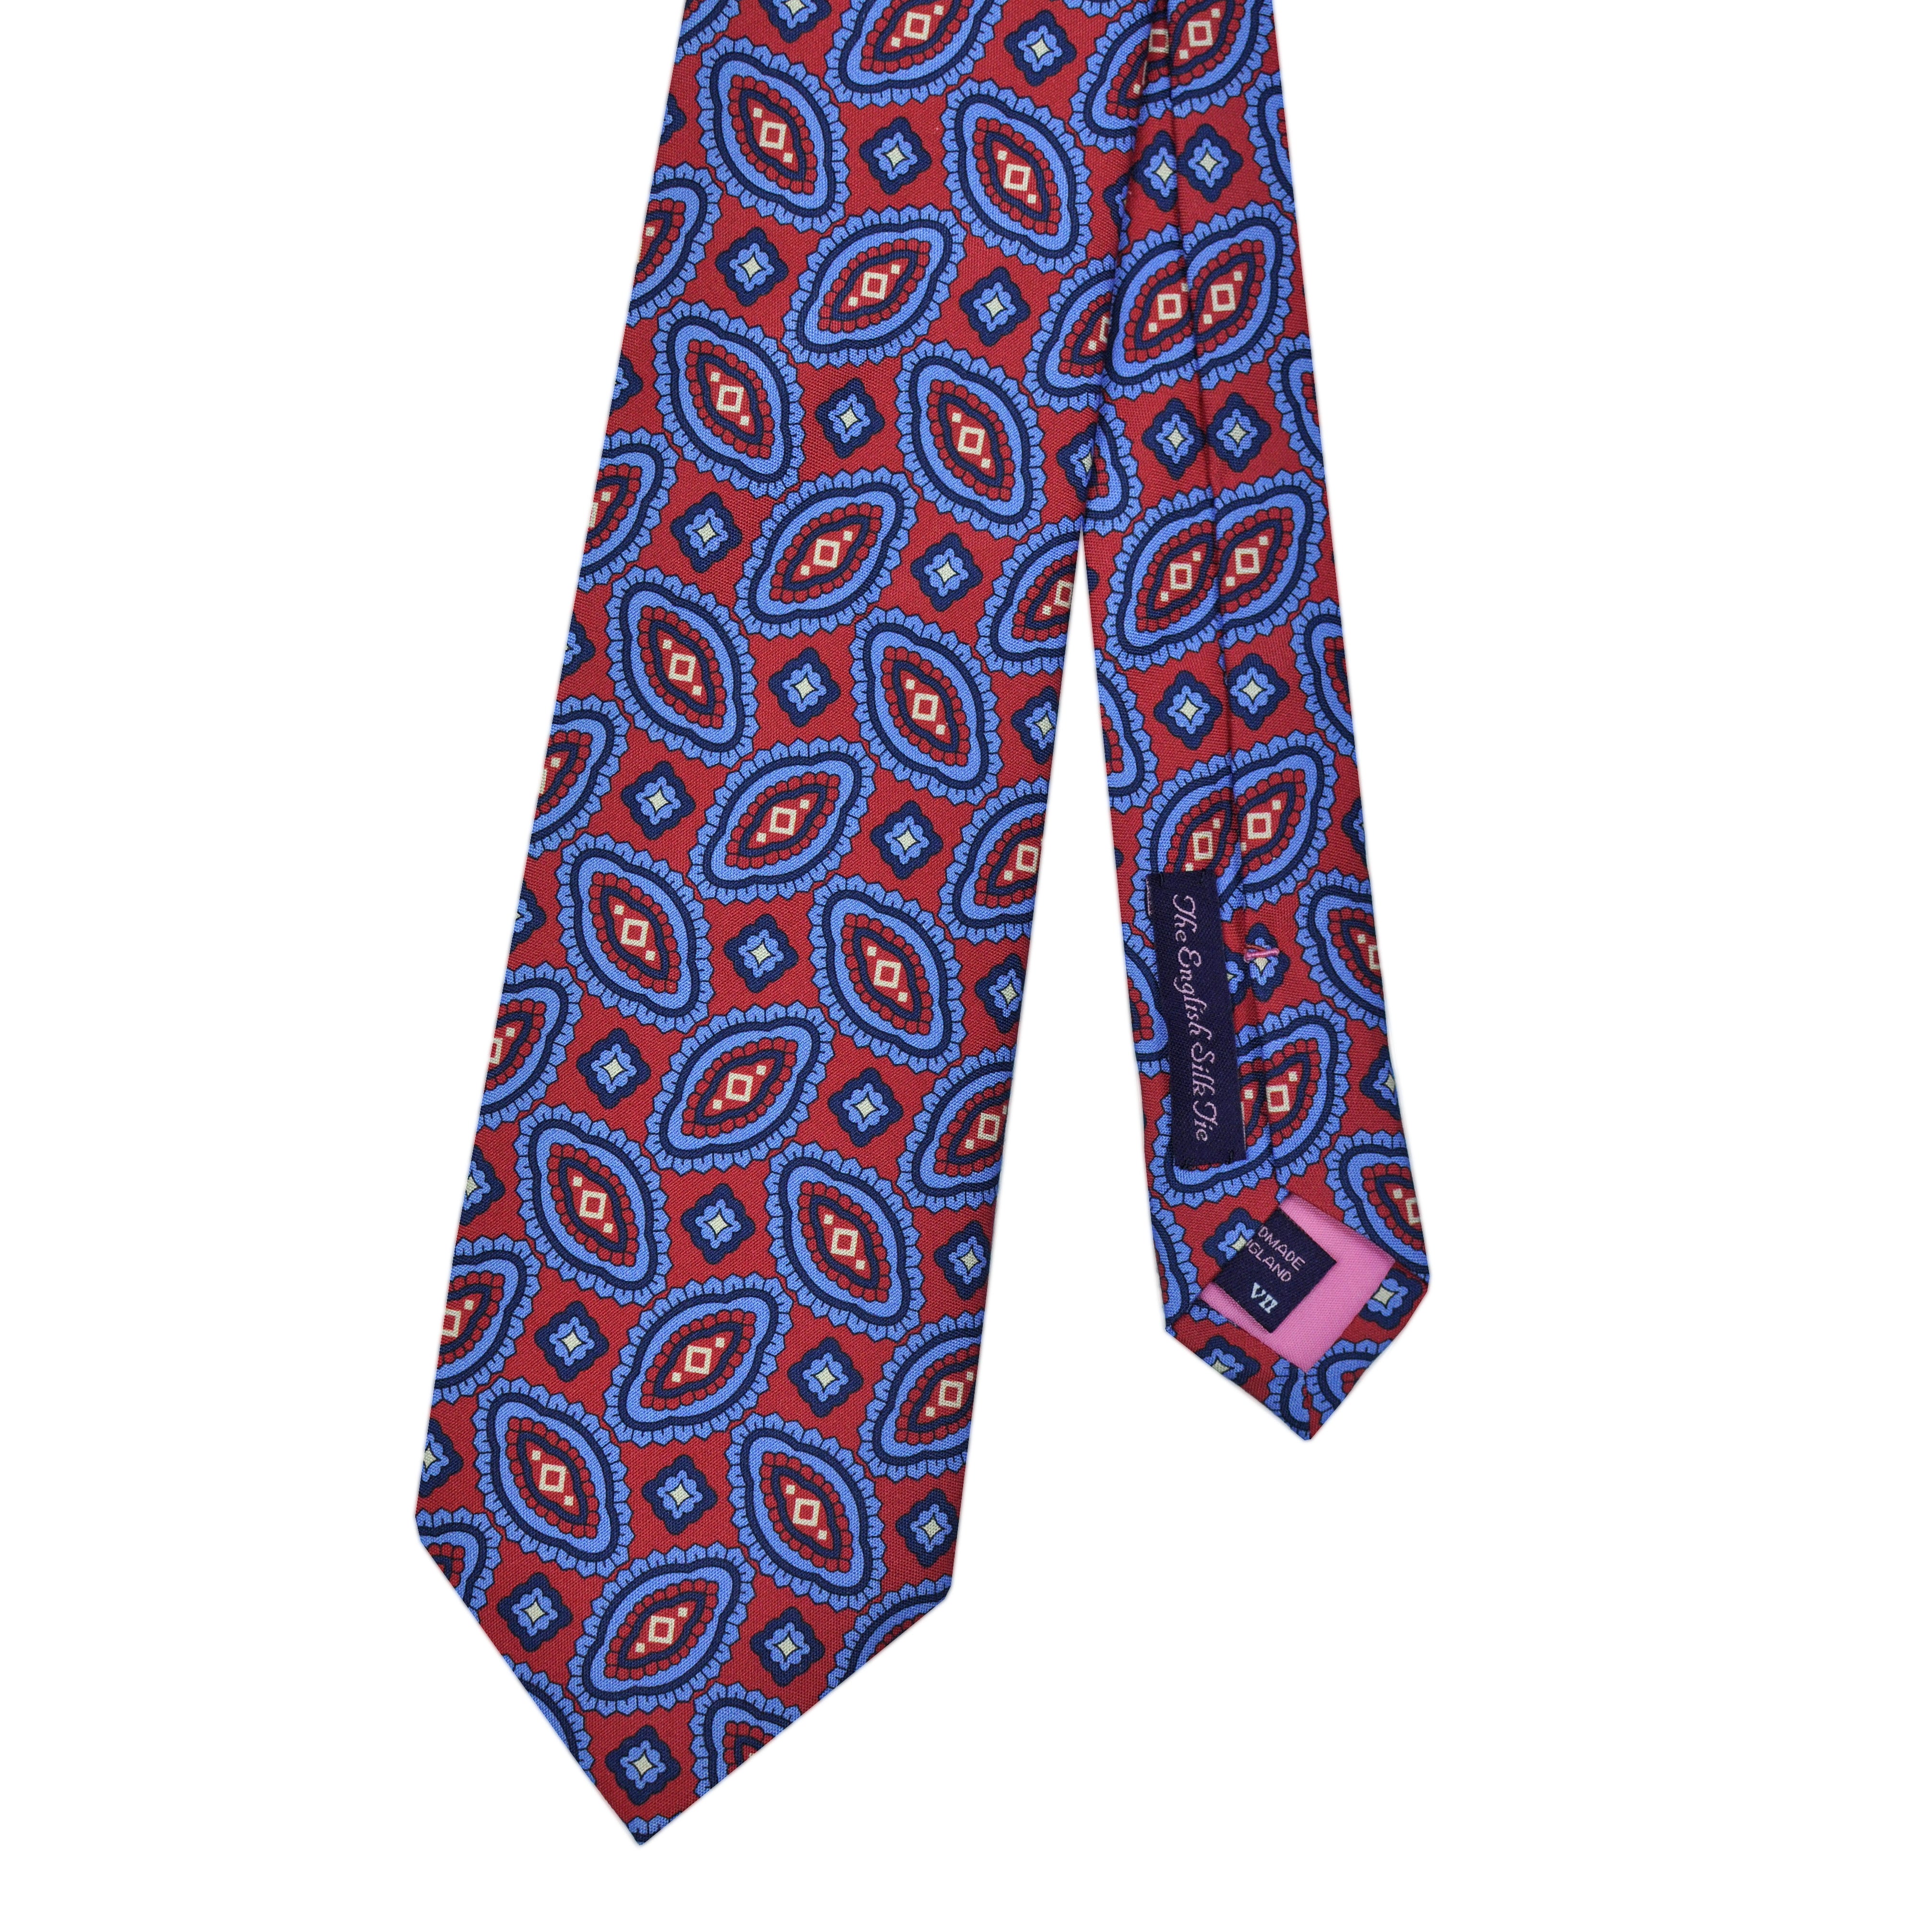 Florets 'Dusty Silk' Print Tie in Blue & Red